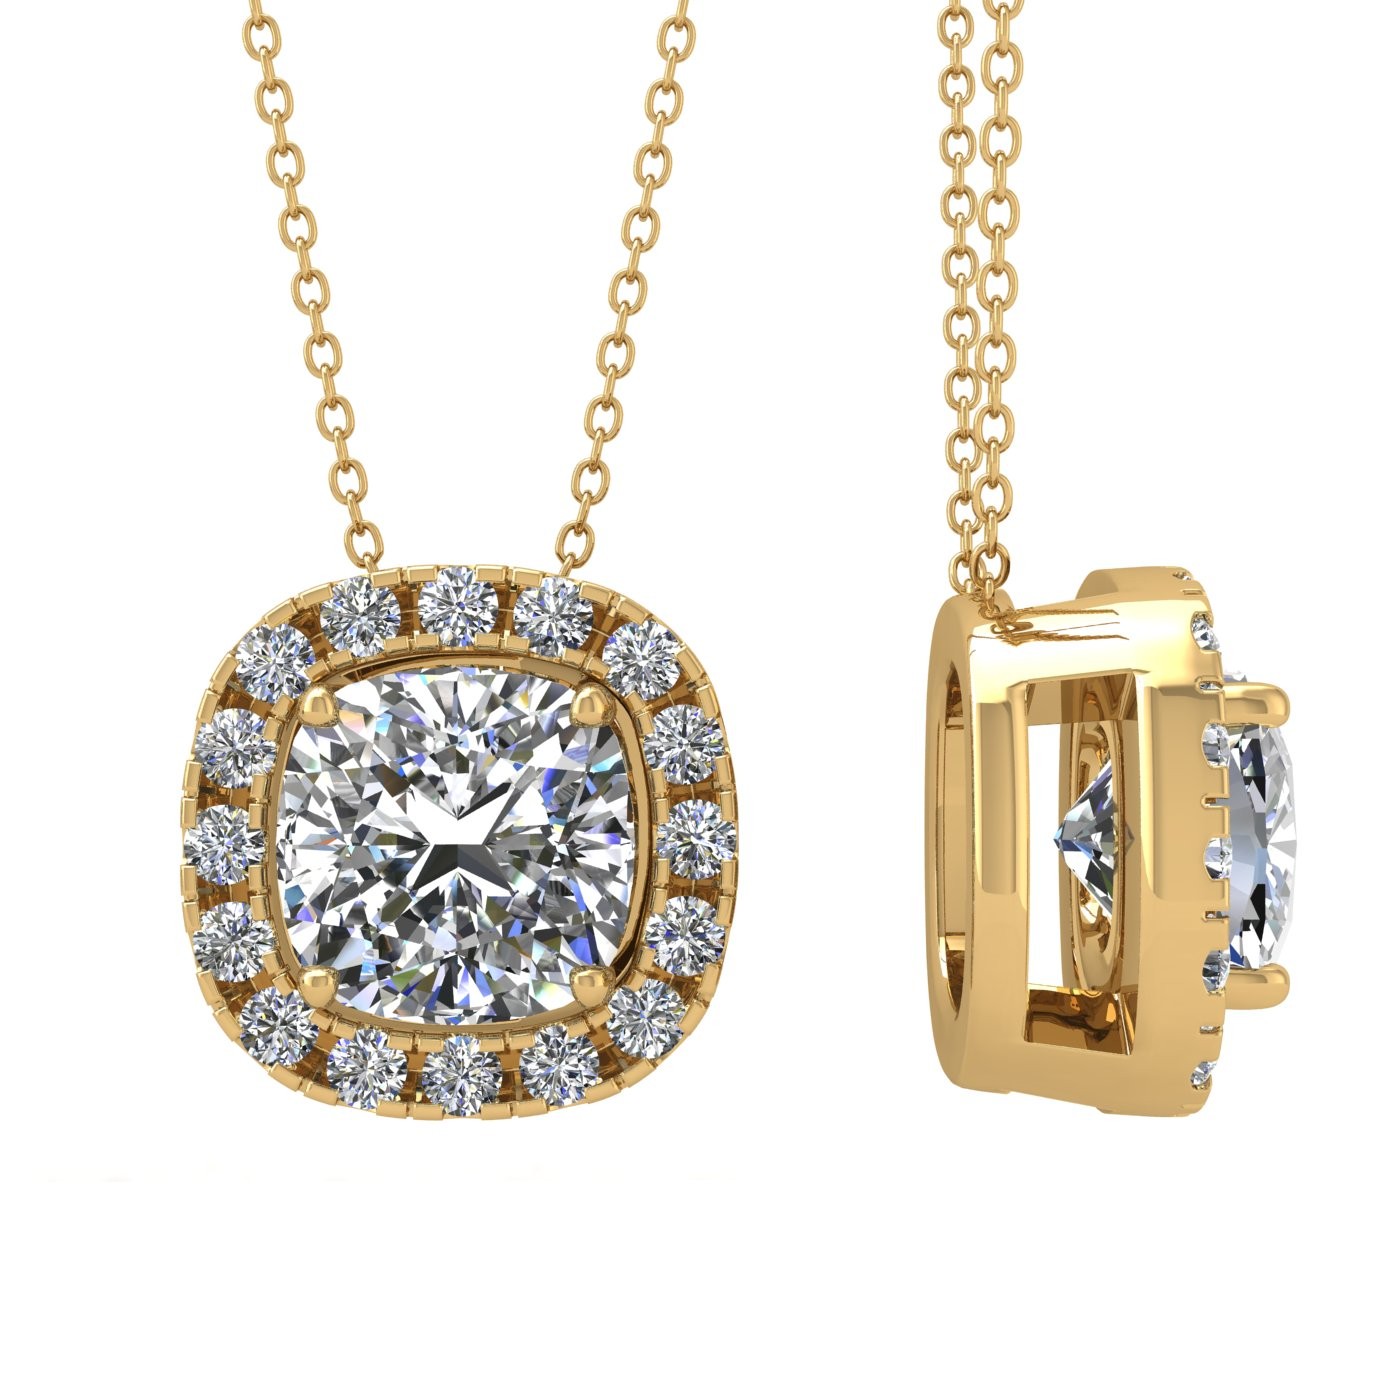 18k yellow gold 2 ct 4 prongs cushion shape diamond pendant with diamond pavÉ set halo Photos & images